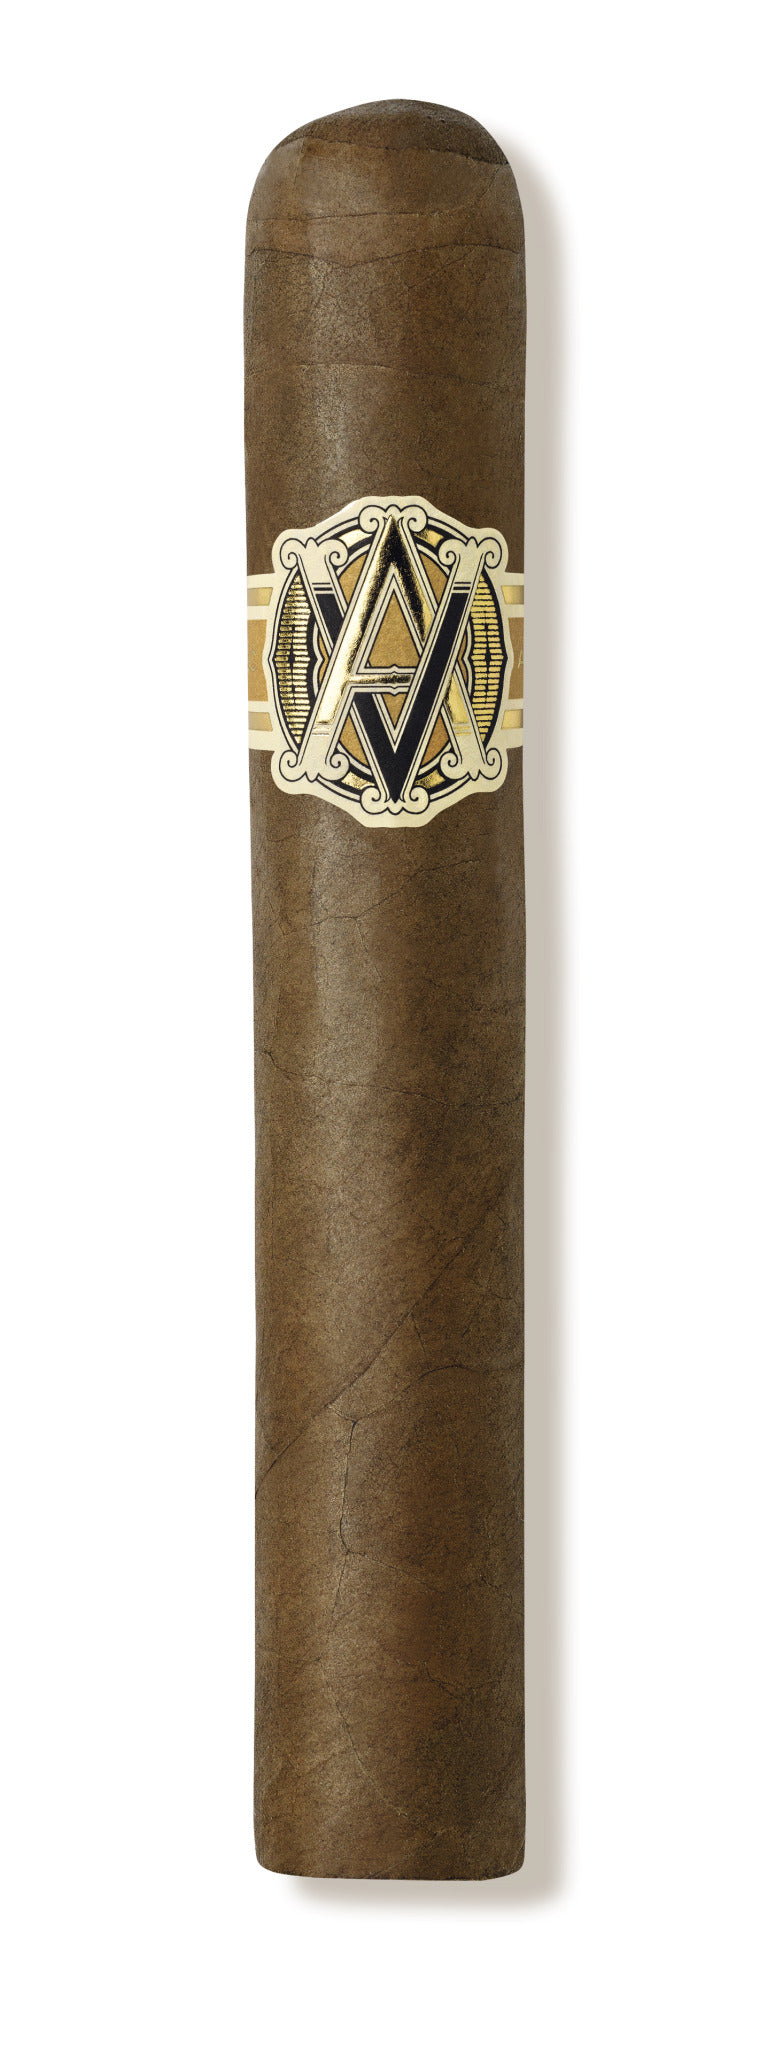 Avo Cigars Classic Maduro Robusto Featured Image